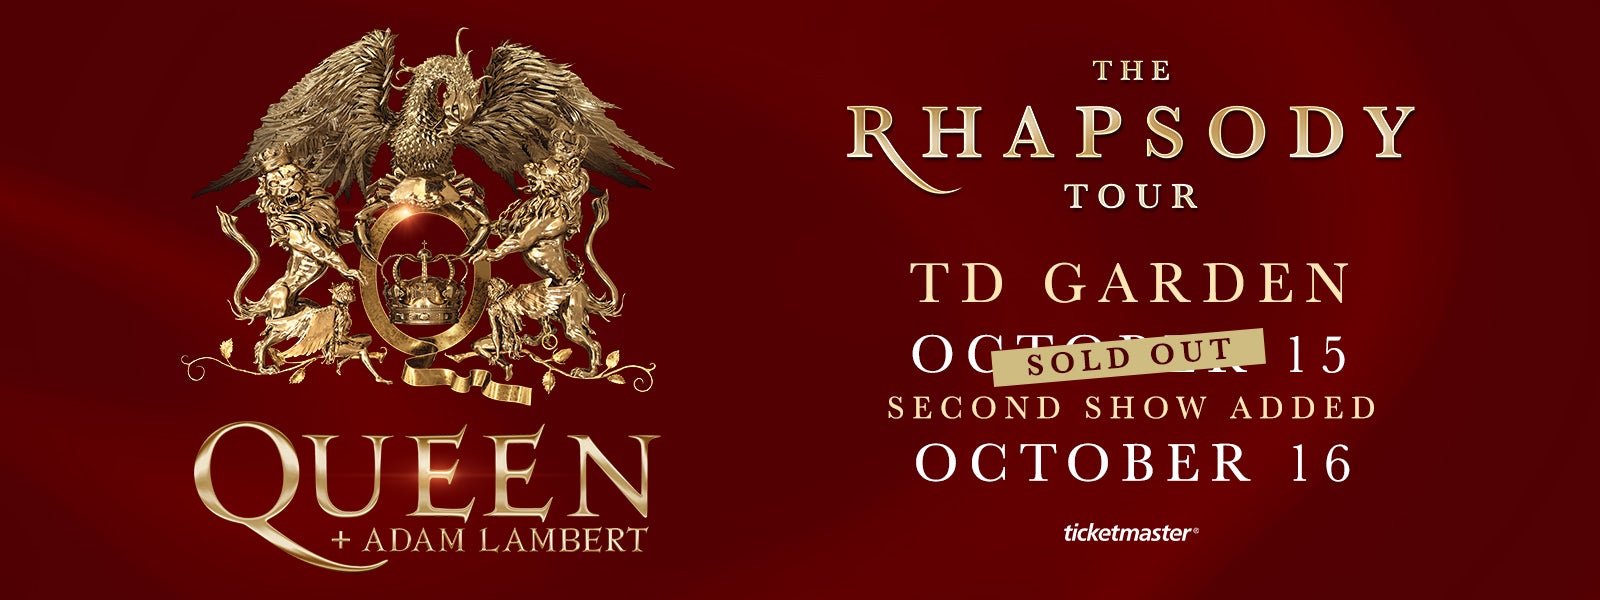 Queen + Adam Lambert TD Garden